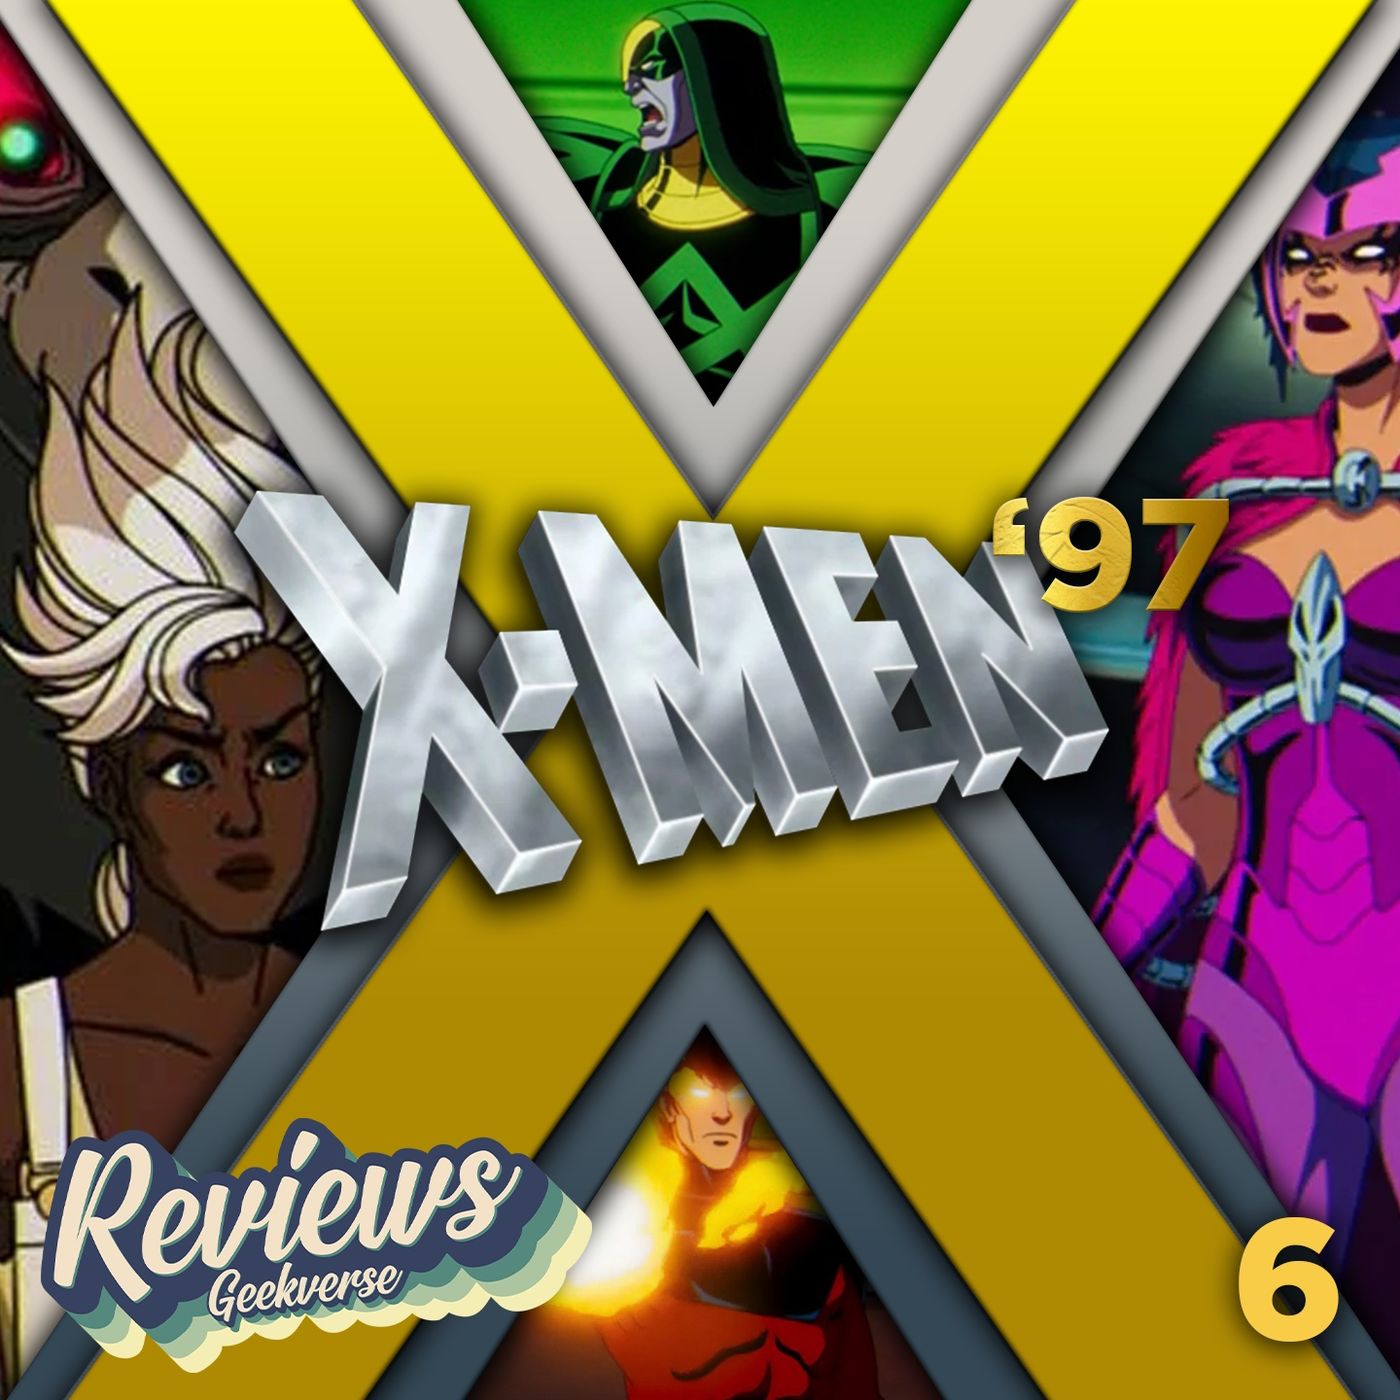 X-Men 97 Episode 6 Spoilers Review